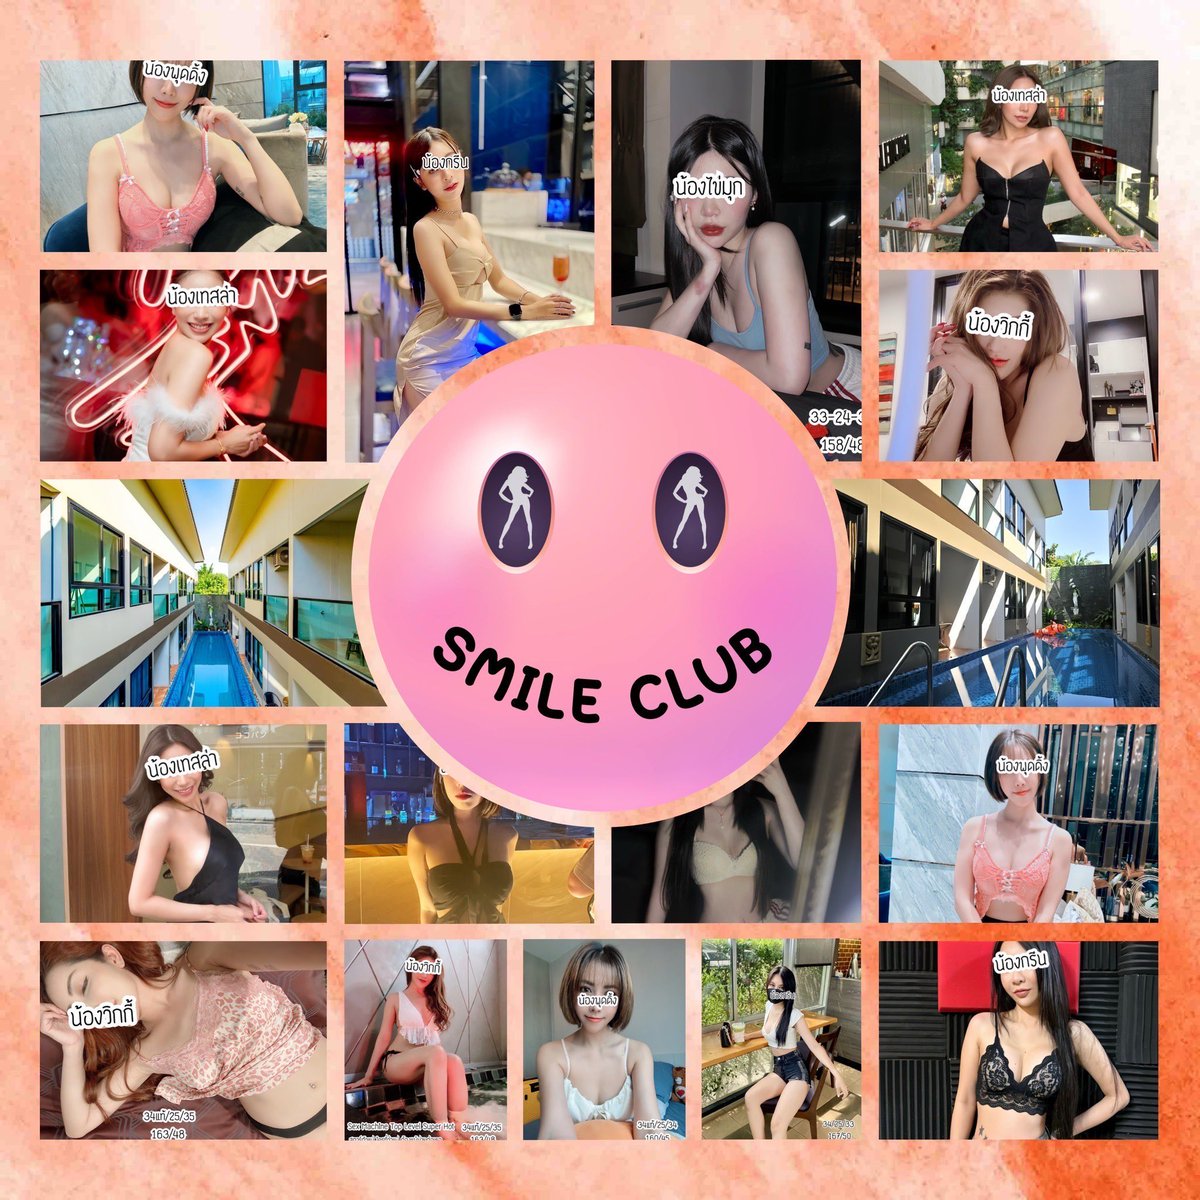 Smile Club คลับสำหรับหนุ่มขี้เหงา เปล่าเปลี่ยว เพื่อนเที่ยว เพื่อนแก้เหงา แวะนัดสาวๆเป็นเพื่อนใจ คลิ๊กเลยจ้า linktr.ee/smileclublink